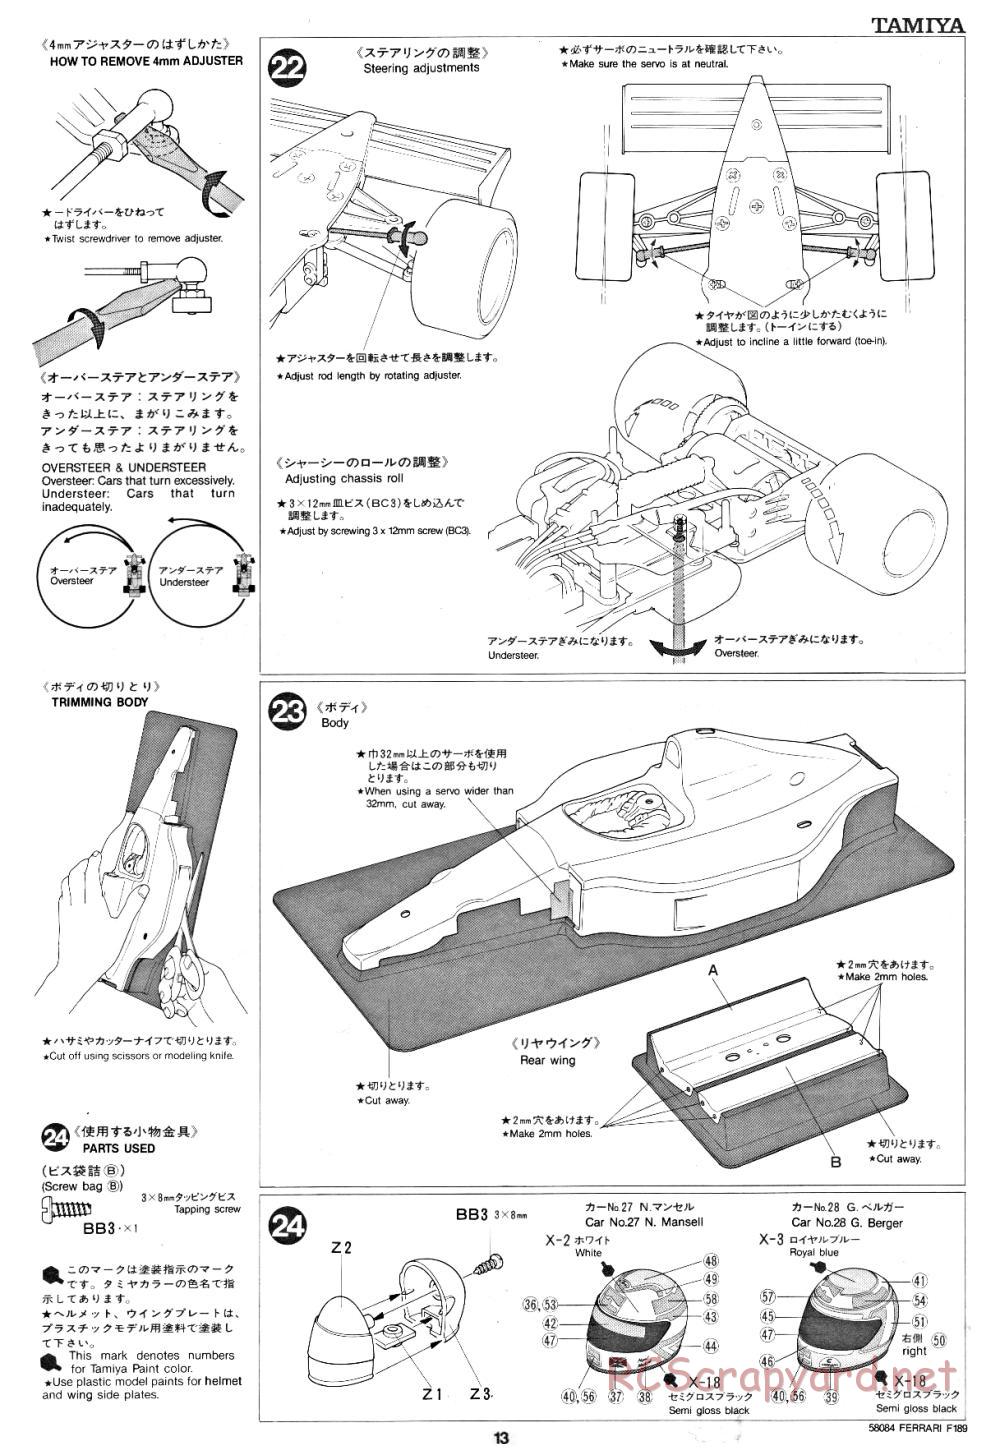 Tamiya - Ferrari F189 Late Version - 58084 - Manual - Page 13